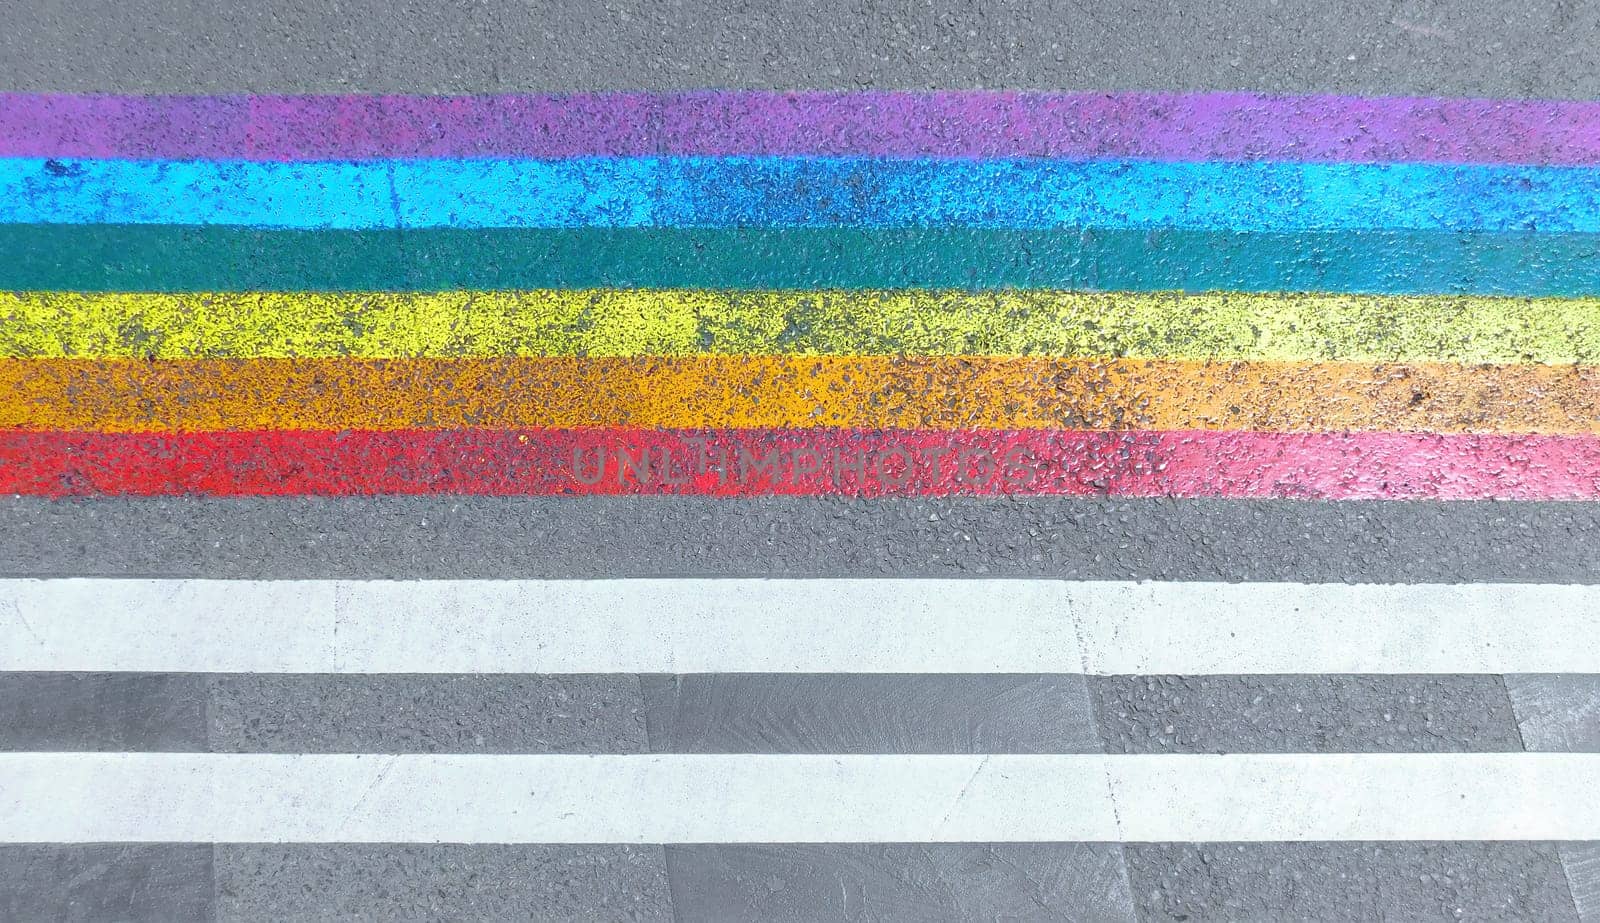 Marked crosswalk with lbgtq pride flag rainbow stripes by Whatawin